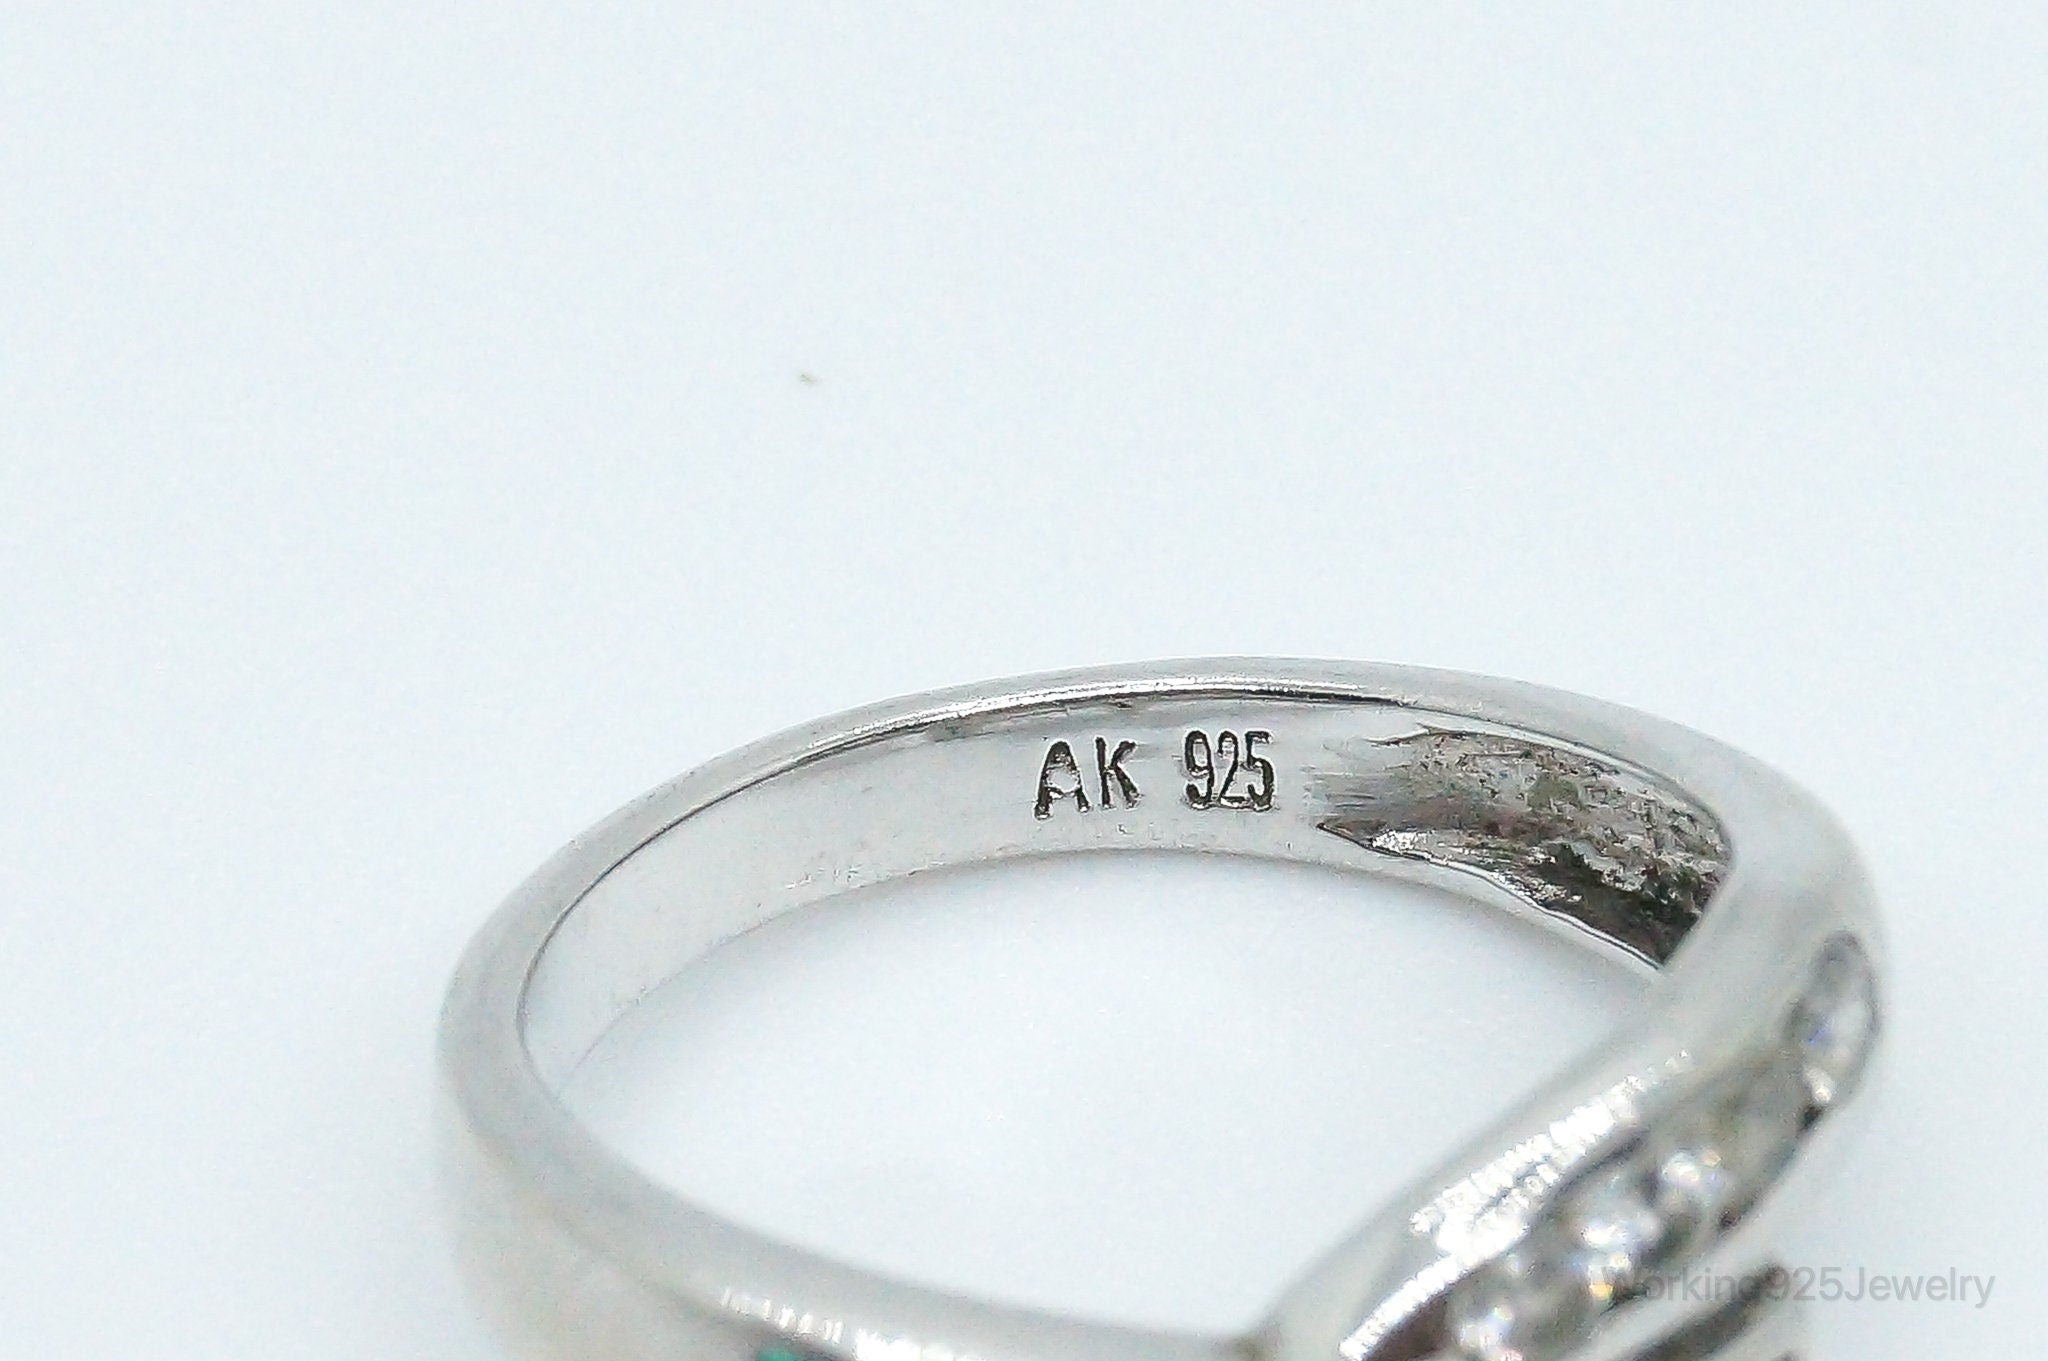 Designer AK Cubic Zirconia Opal Sterling Silver Ring - Size 7